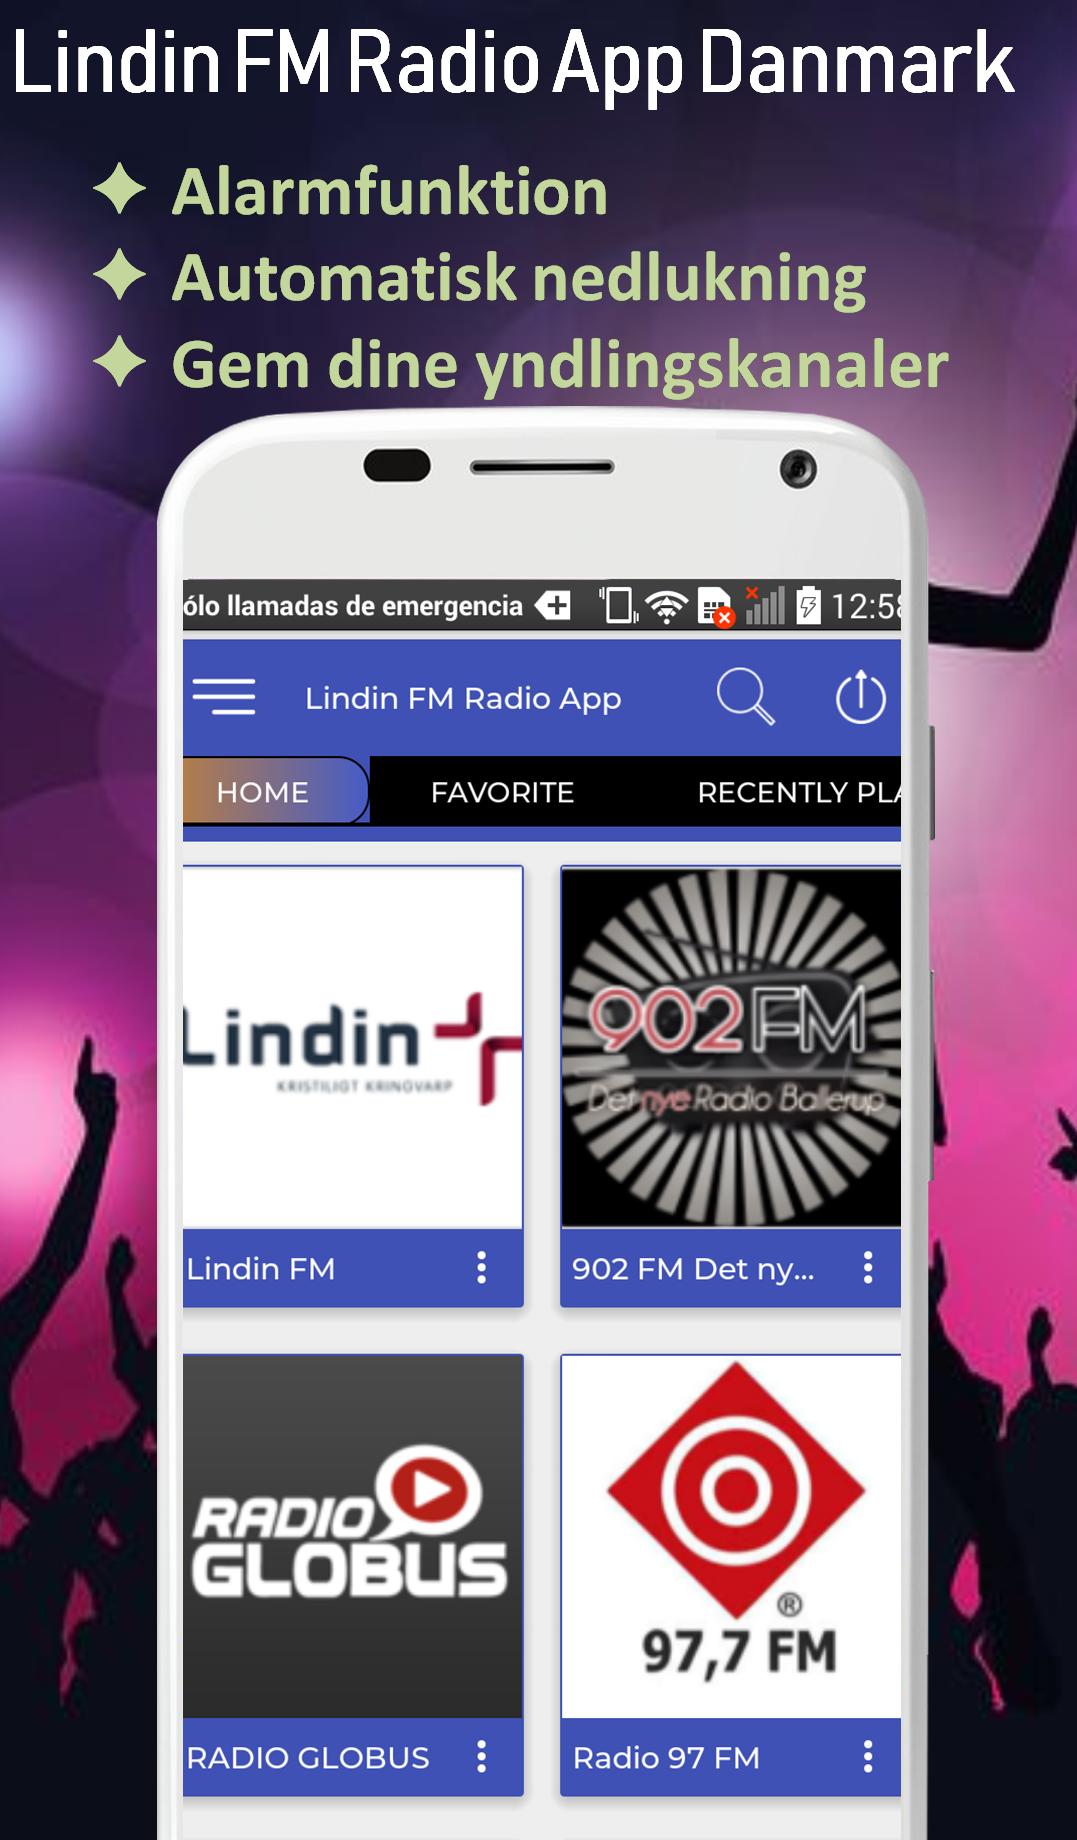 Lindin FM Radio App Danmark for Android - APK Download